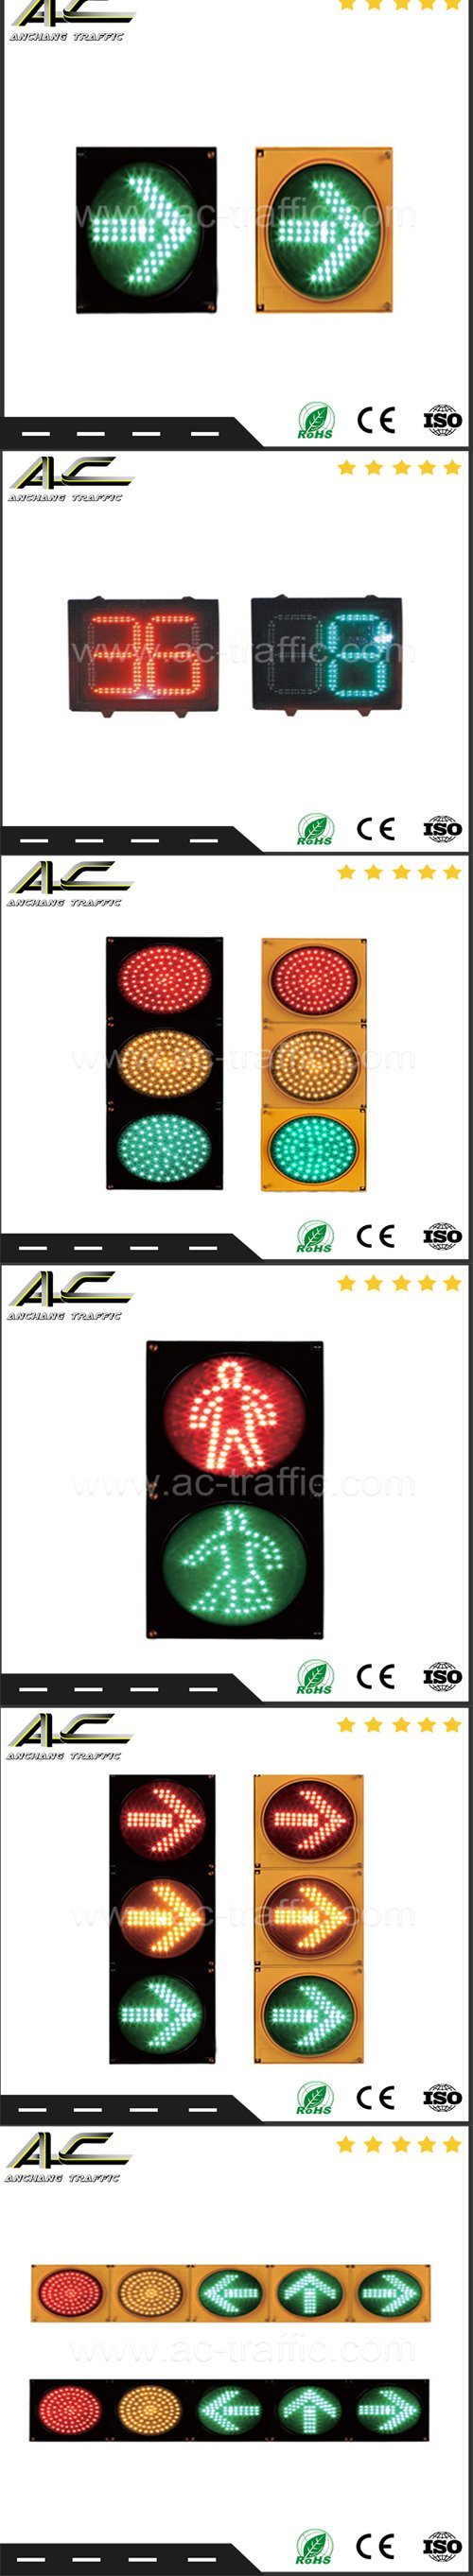 Latest Design Tunnel Red Cross Green Arrow Traffic Signal Light